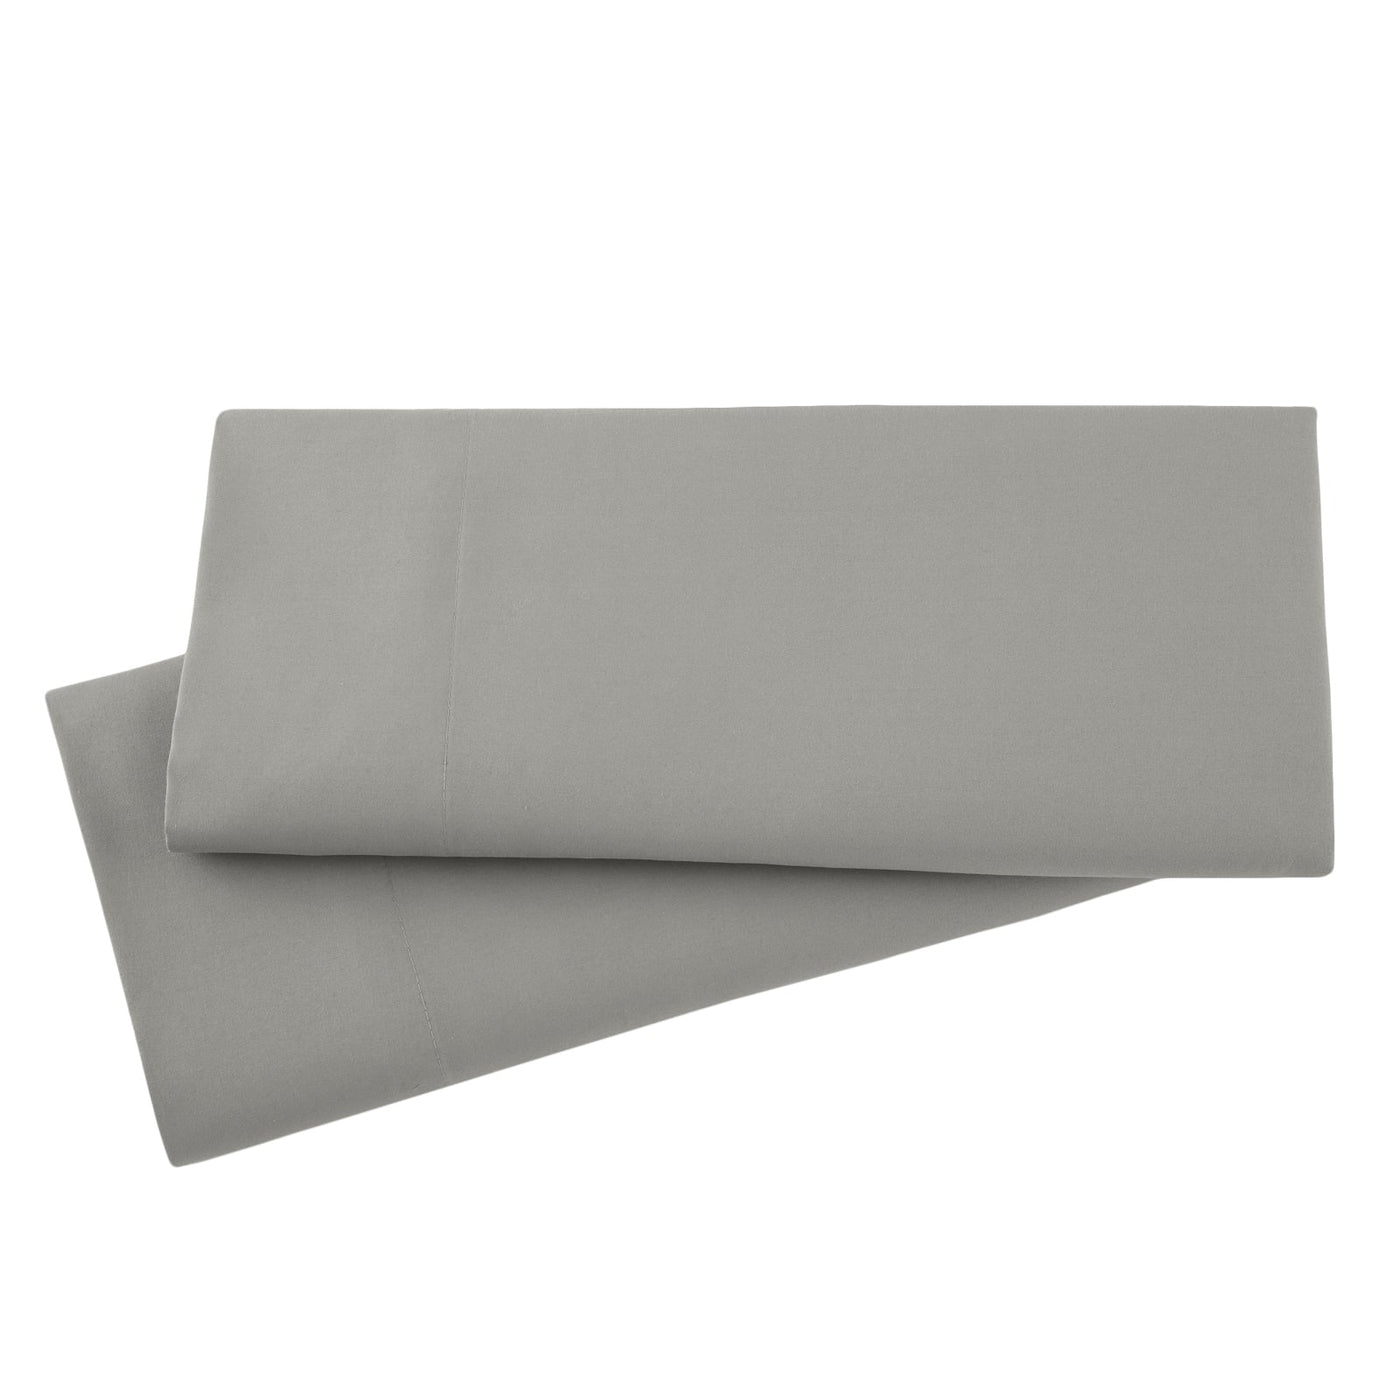 Vilano Springs 2-Piece Pillow Cases in Steel Grey Stack Together#color_vilano-steel-gray